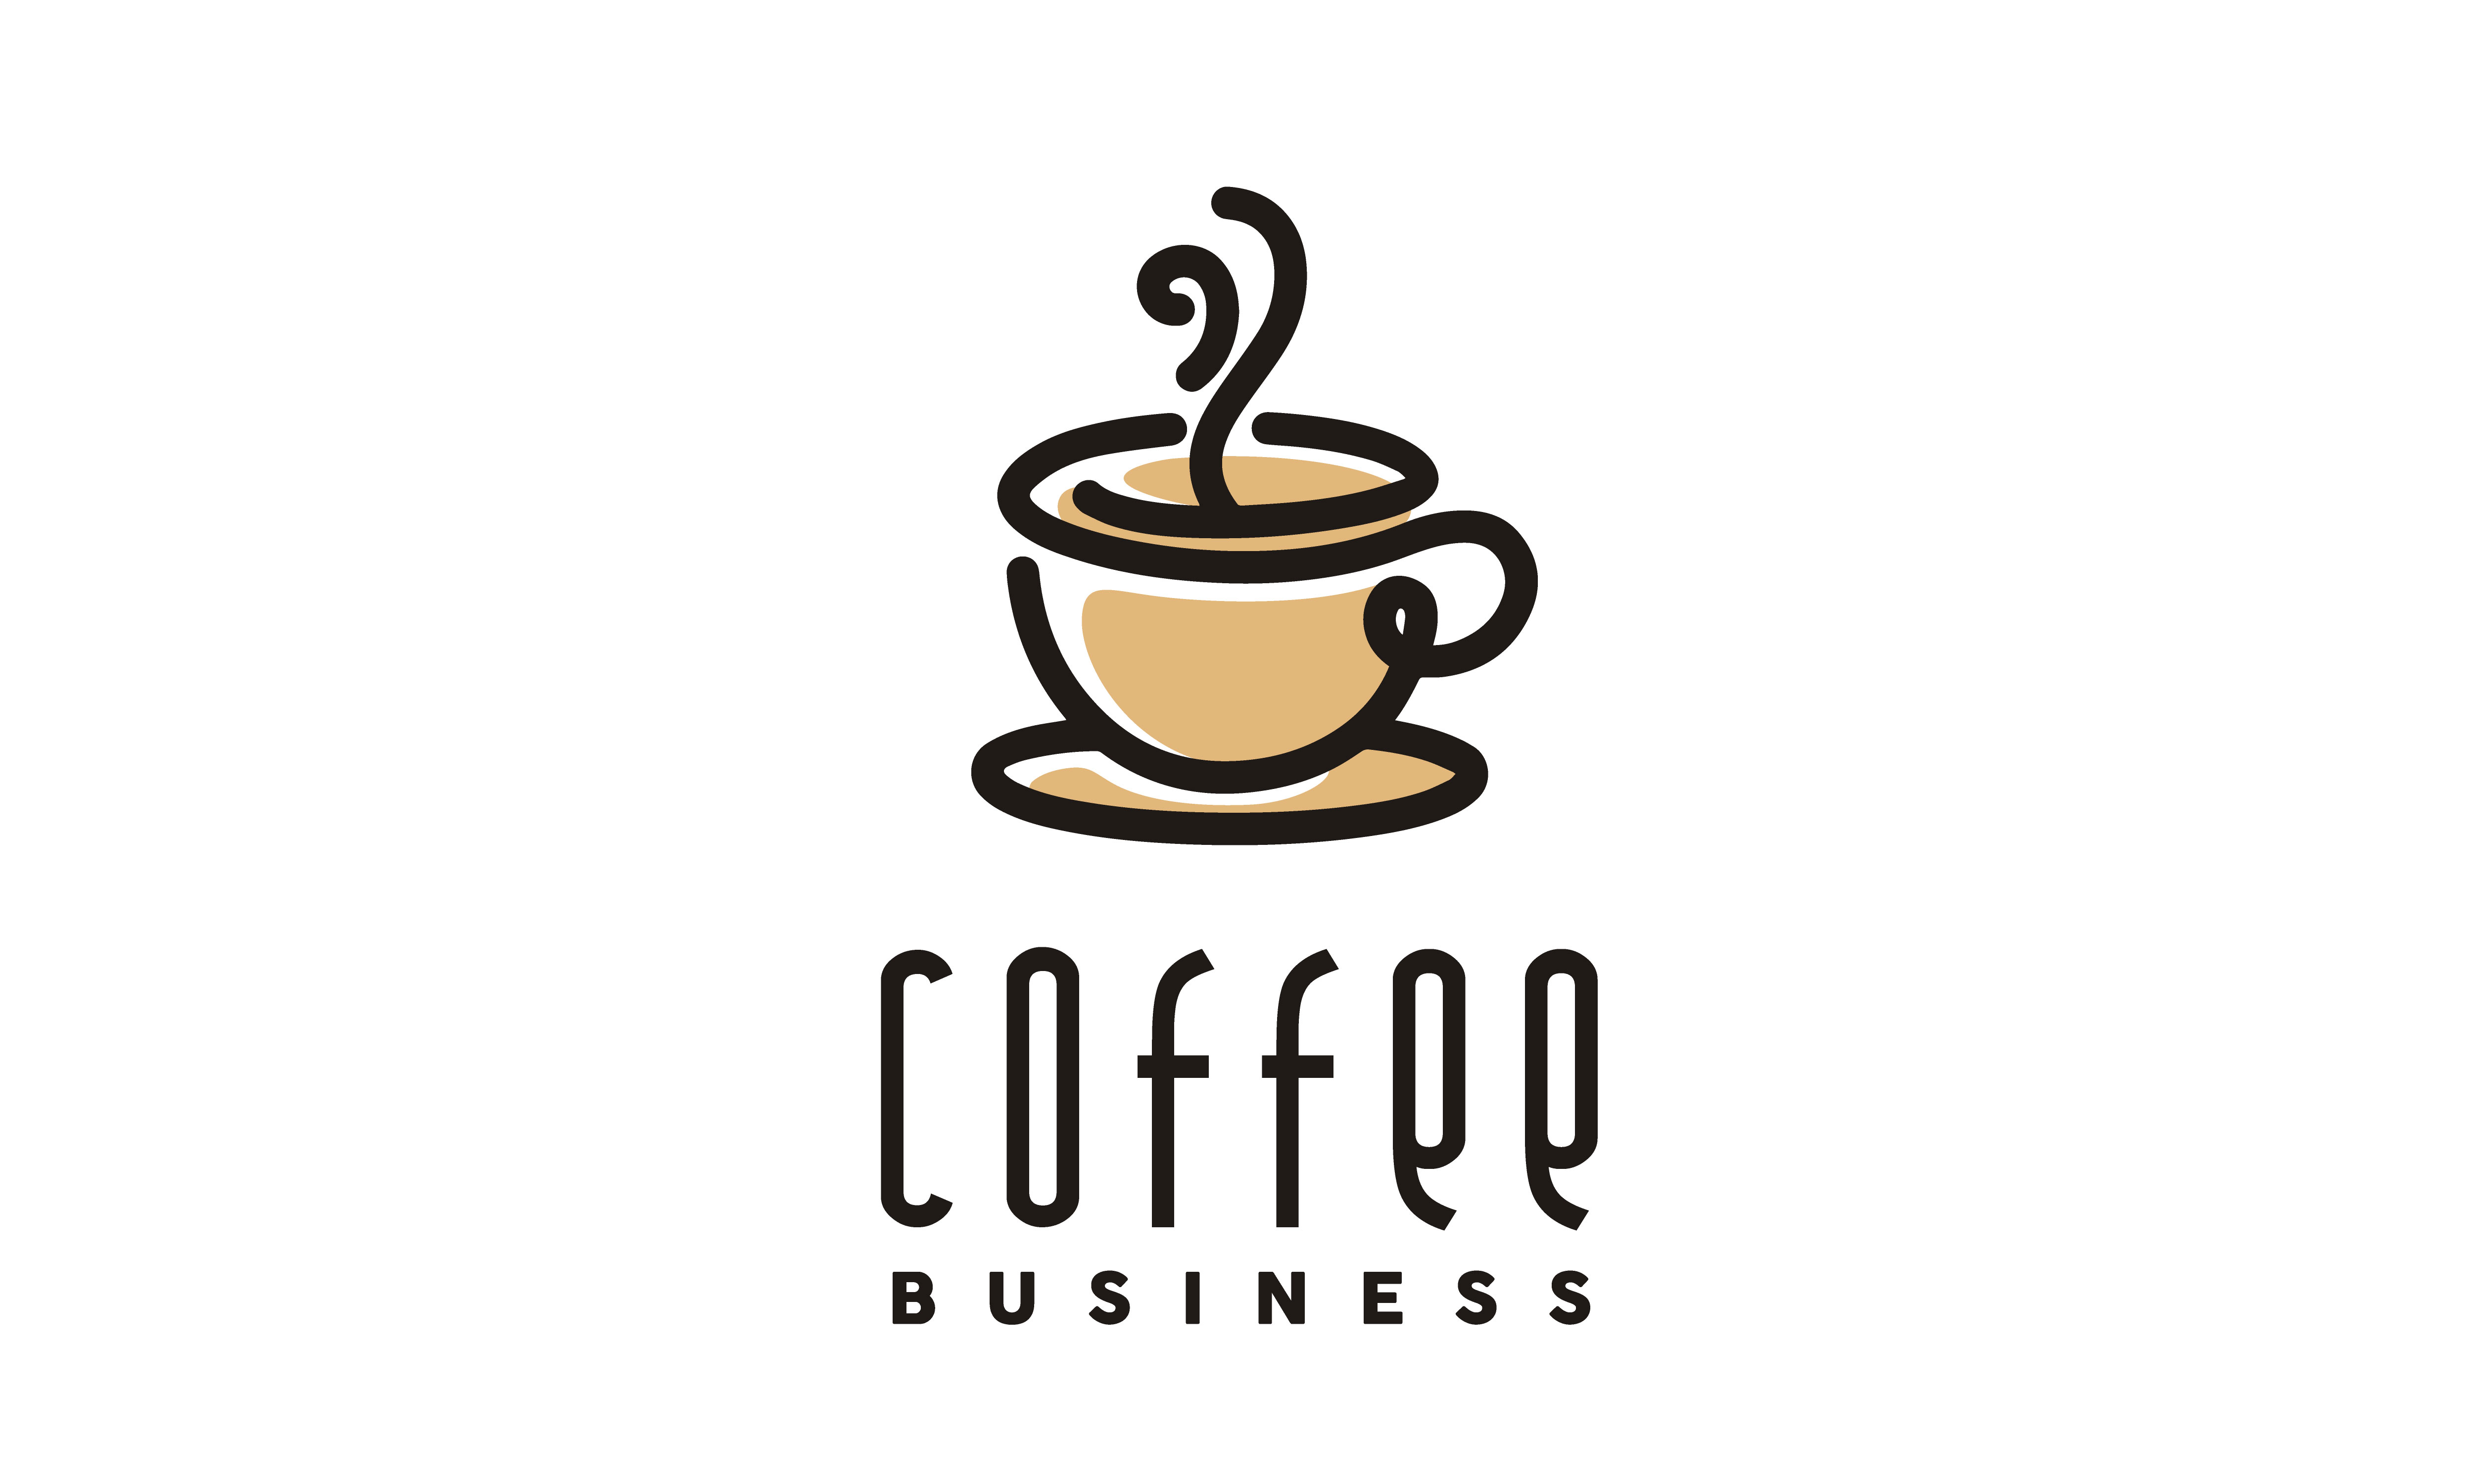 Brown Coffee Cup Smoke, Cafe Bar Logo Graphic by Enola99d · Creative Fabrica